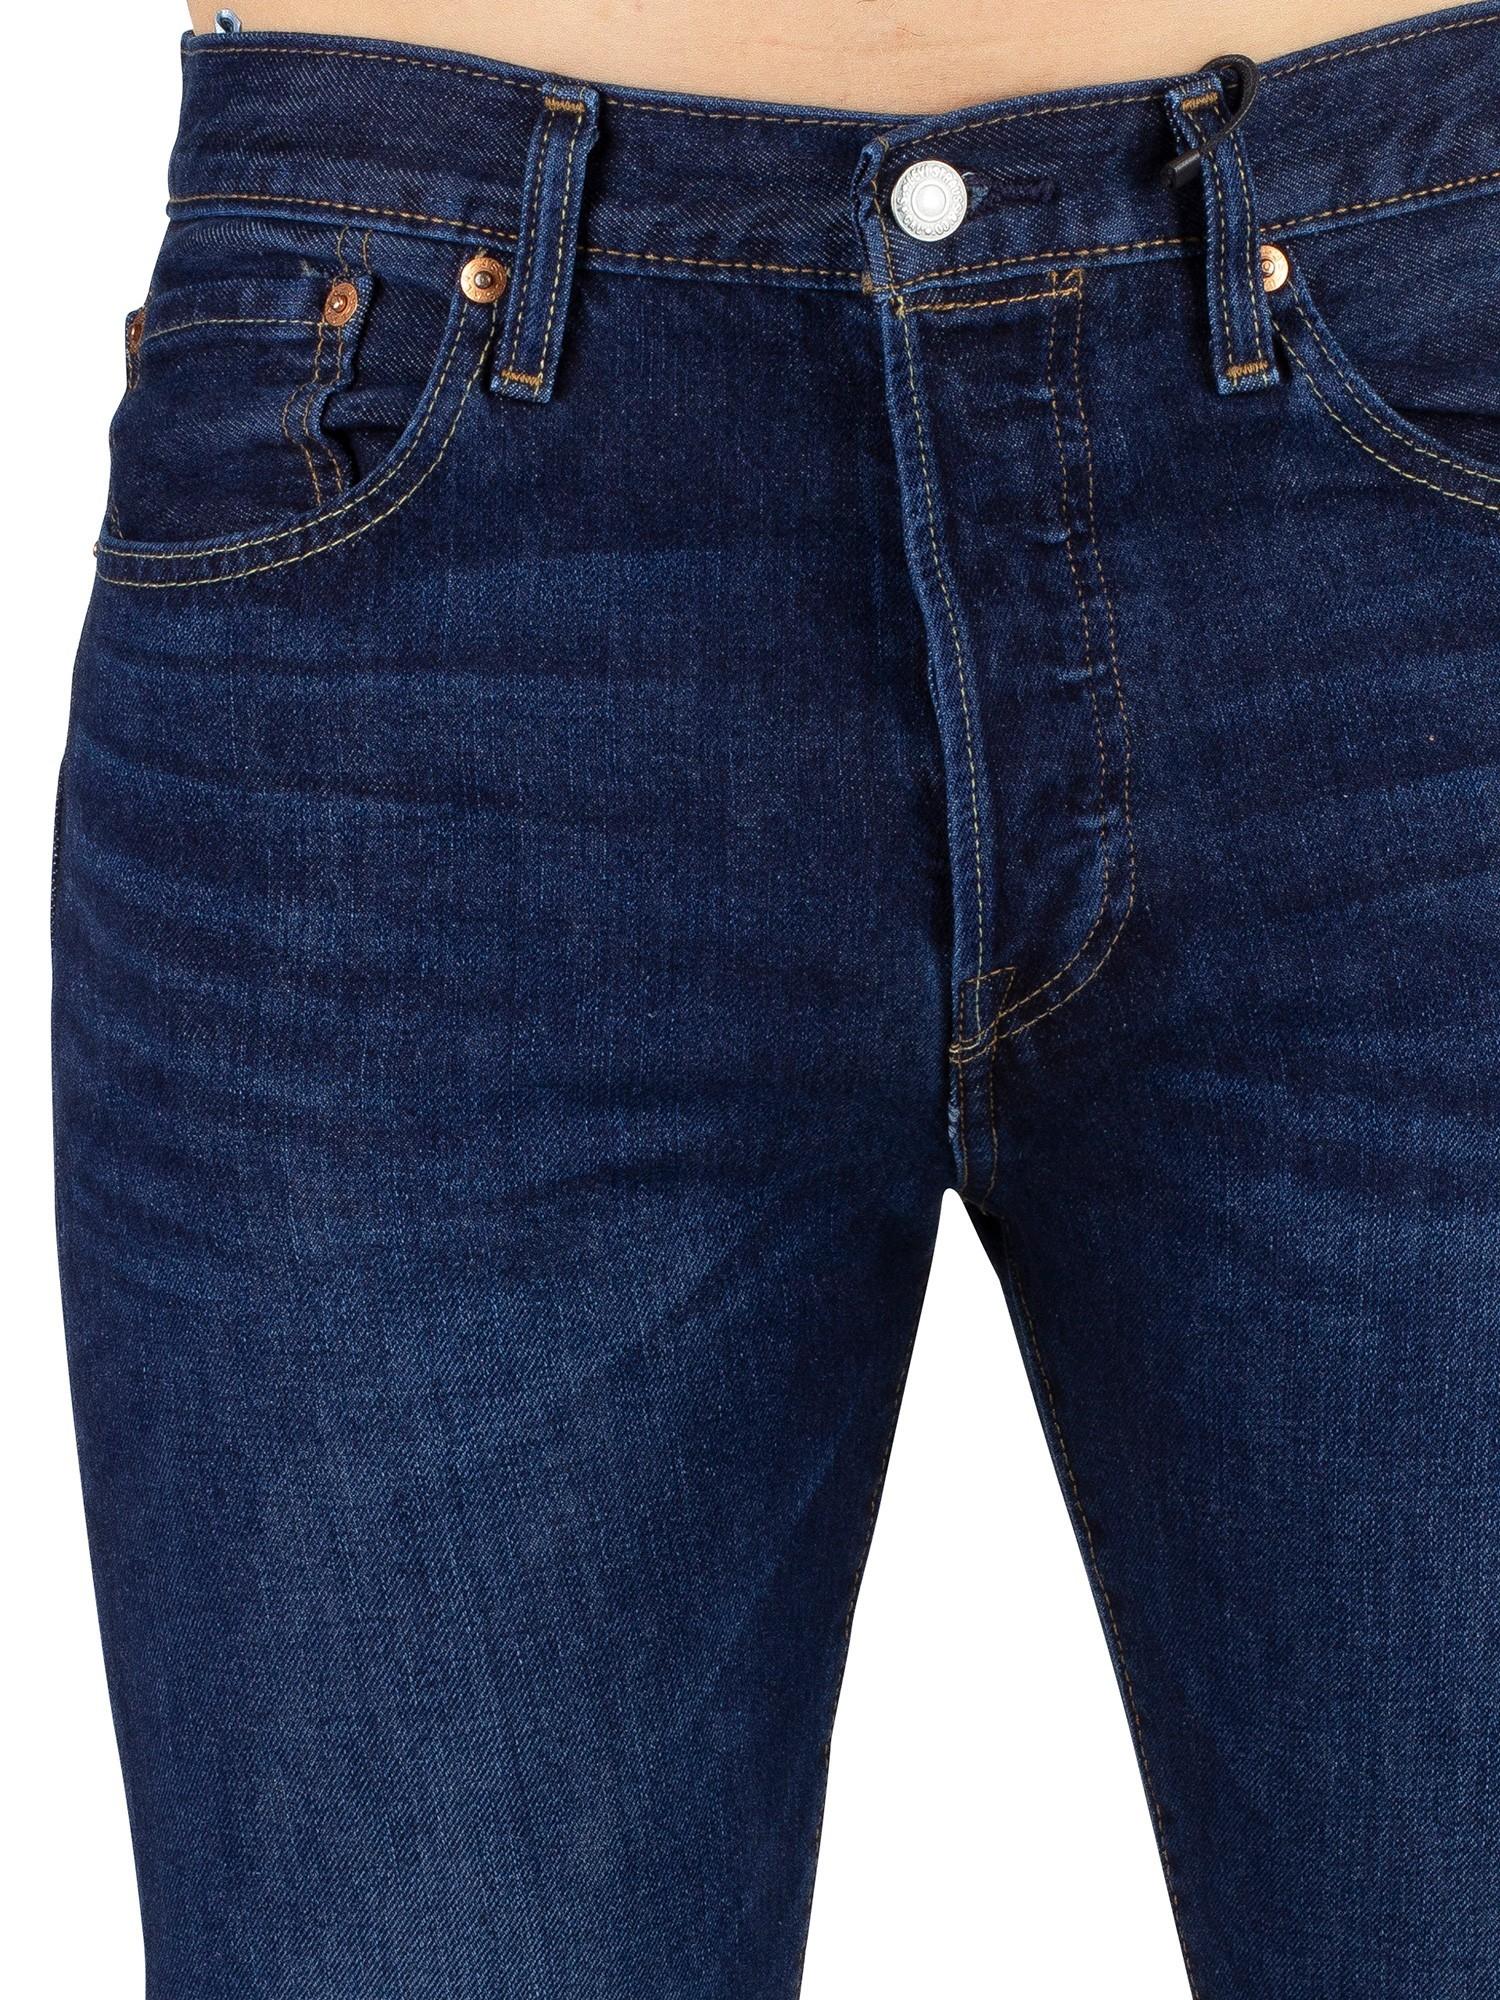 Levi's Denim 501 Slim Taper Jeans in Blue for Men - Lyst